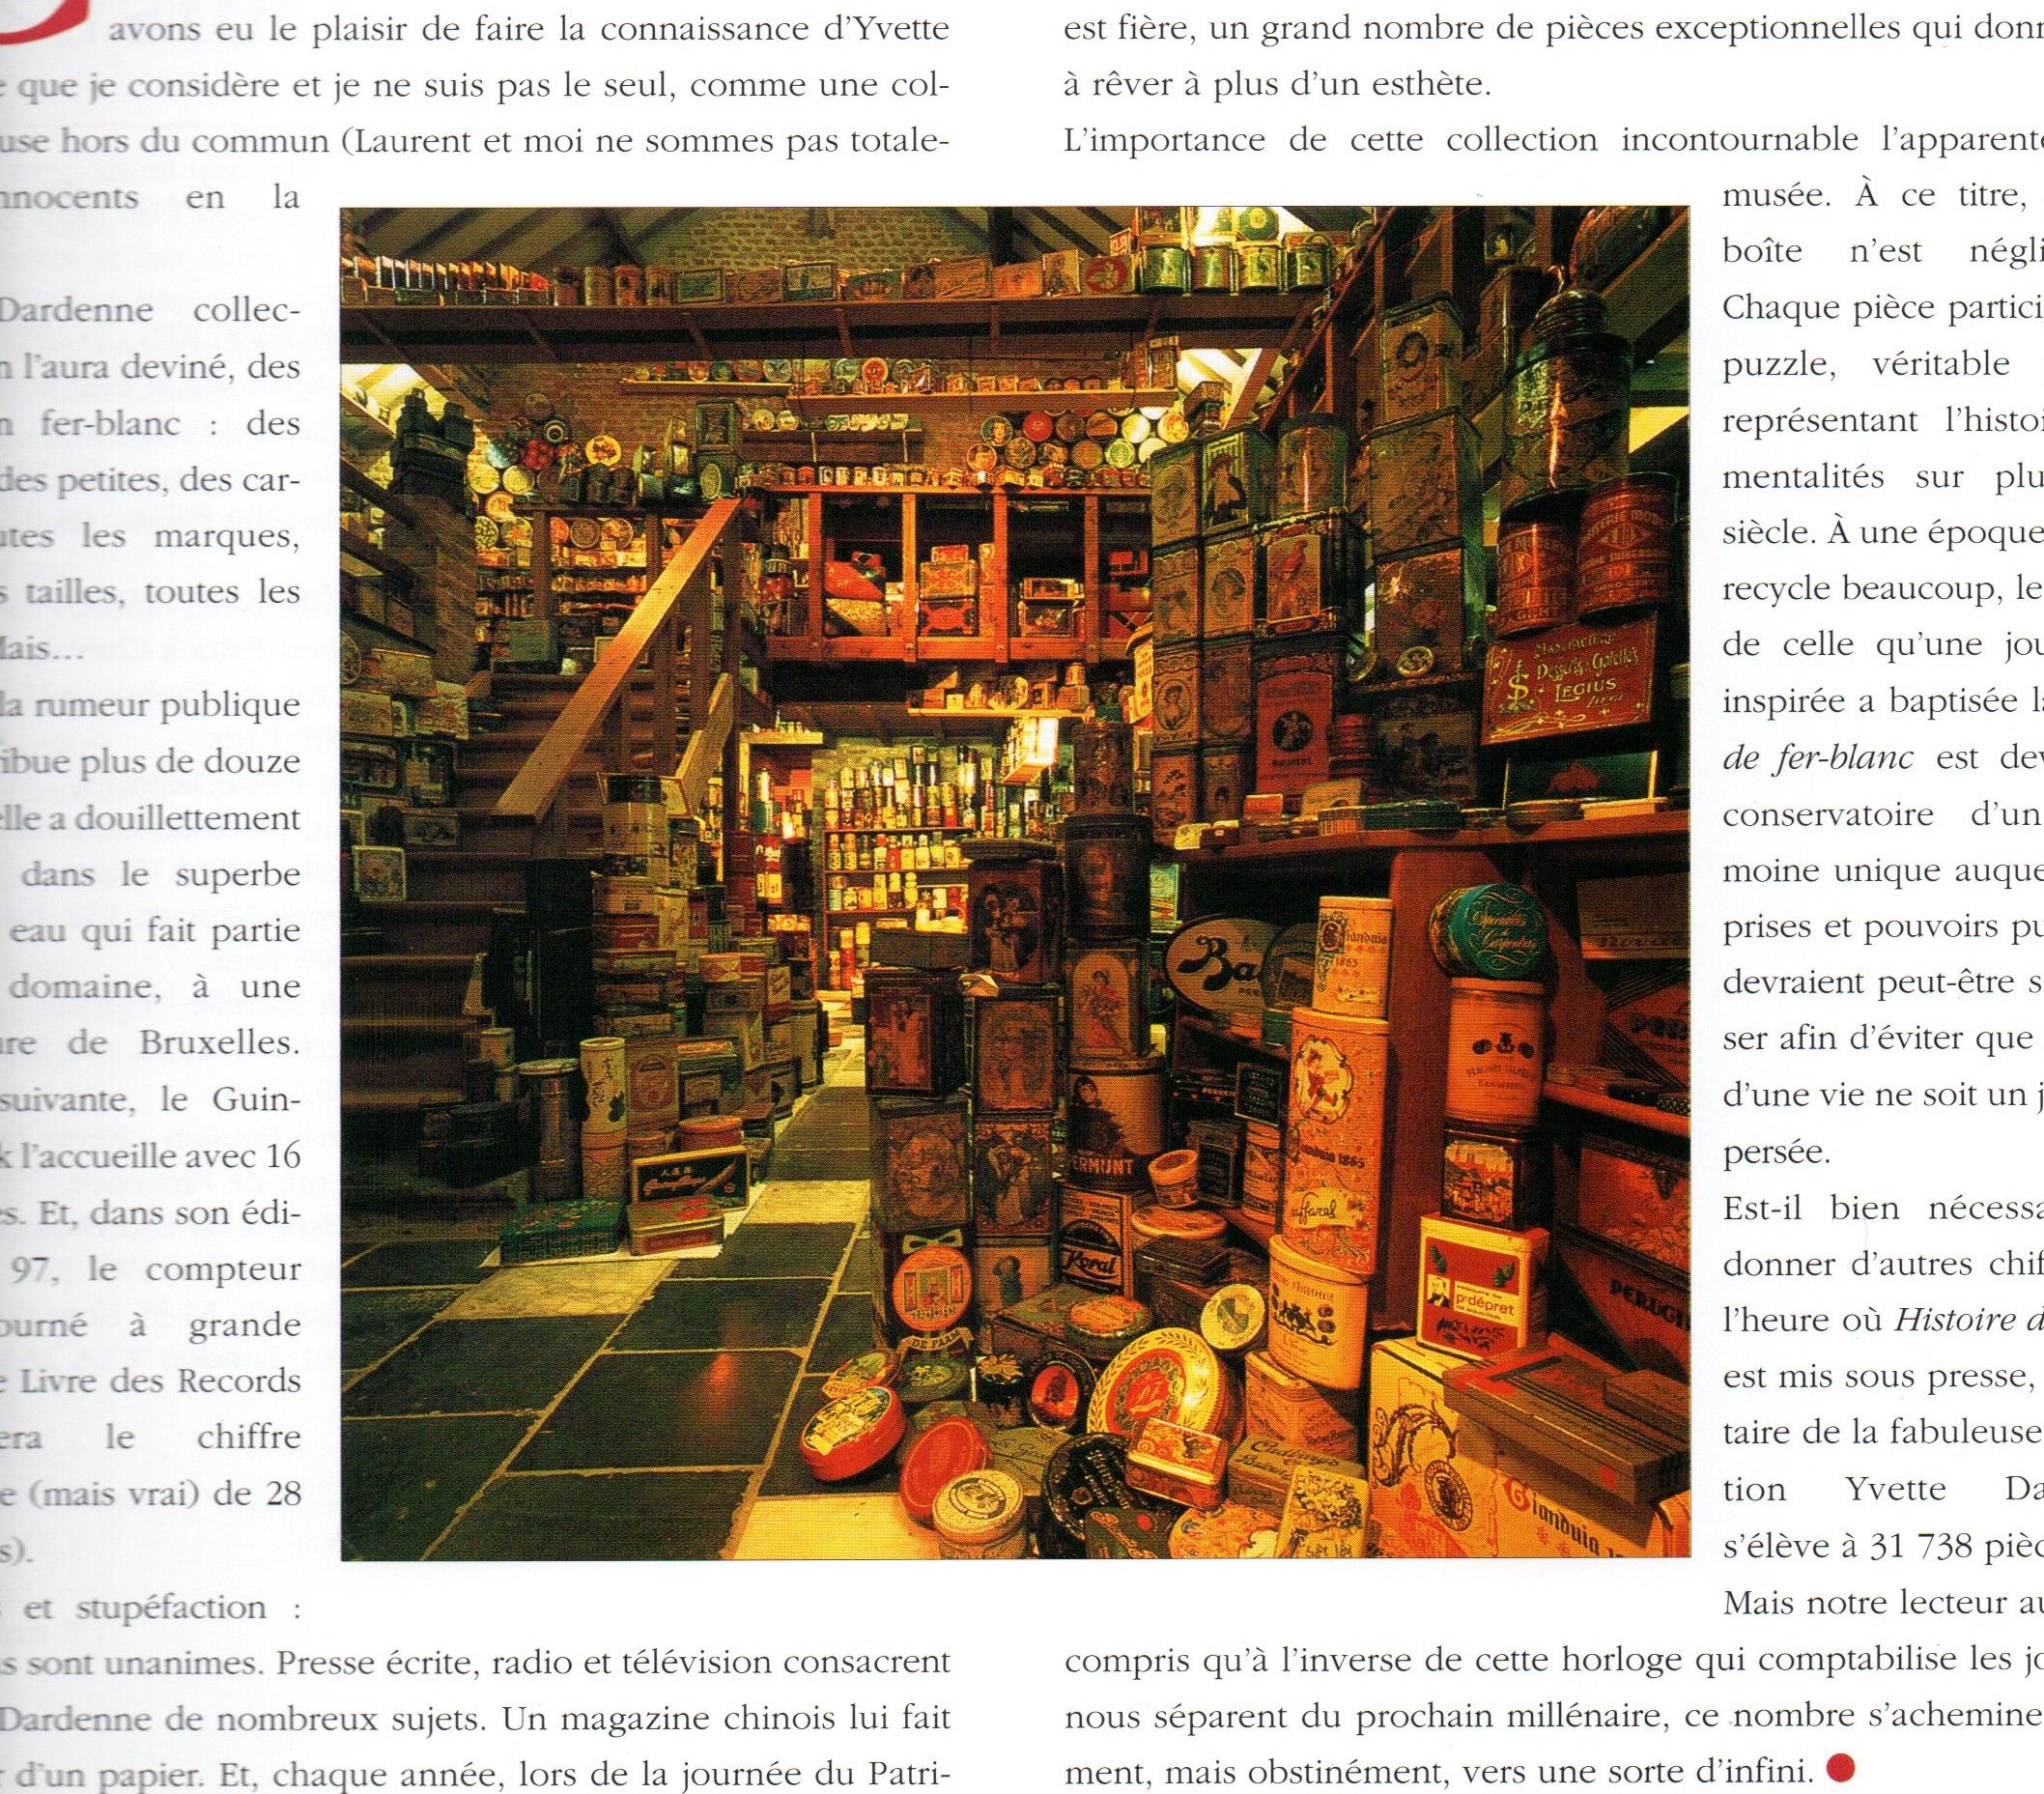 Foto dal libro 'Histoires de boites' di LAURENT VERNAY e FREDDY GHOZLAND - Shirine editions